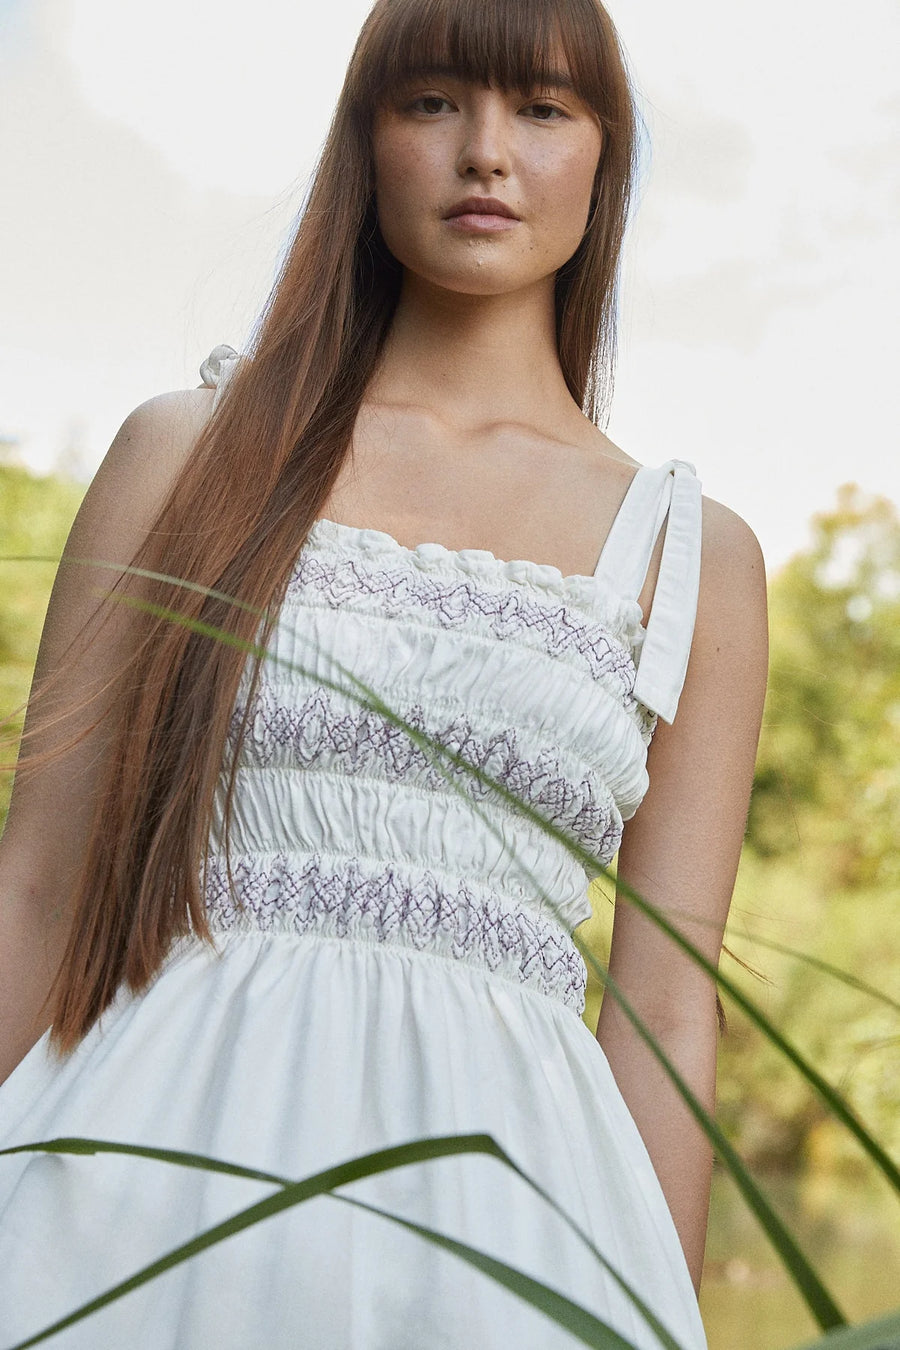 Seventy + Mochi Sally Tie Bandeau Dress Maxi White Denim Lilac Stitching